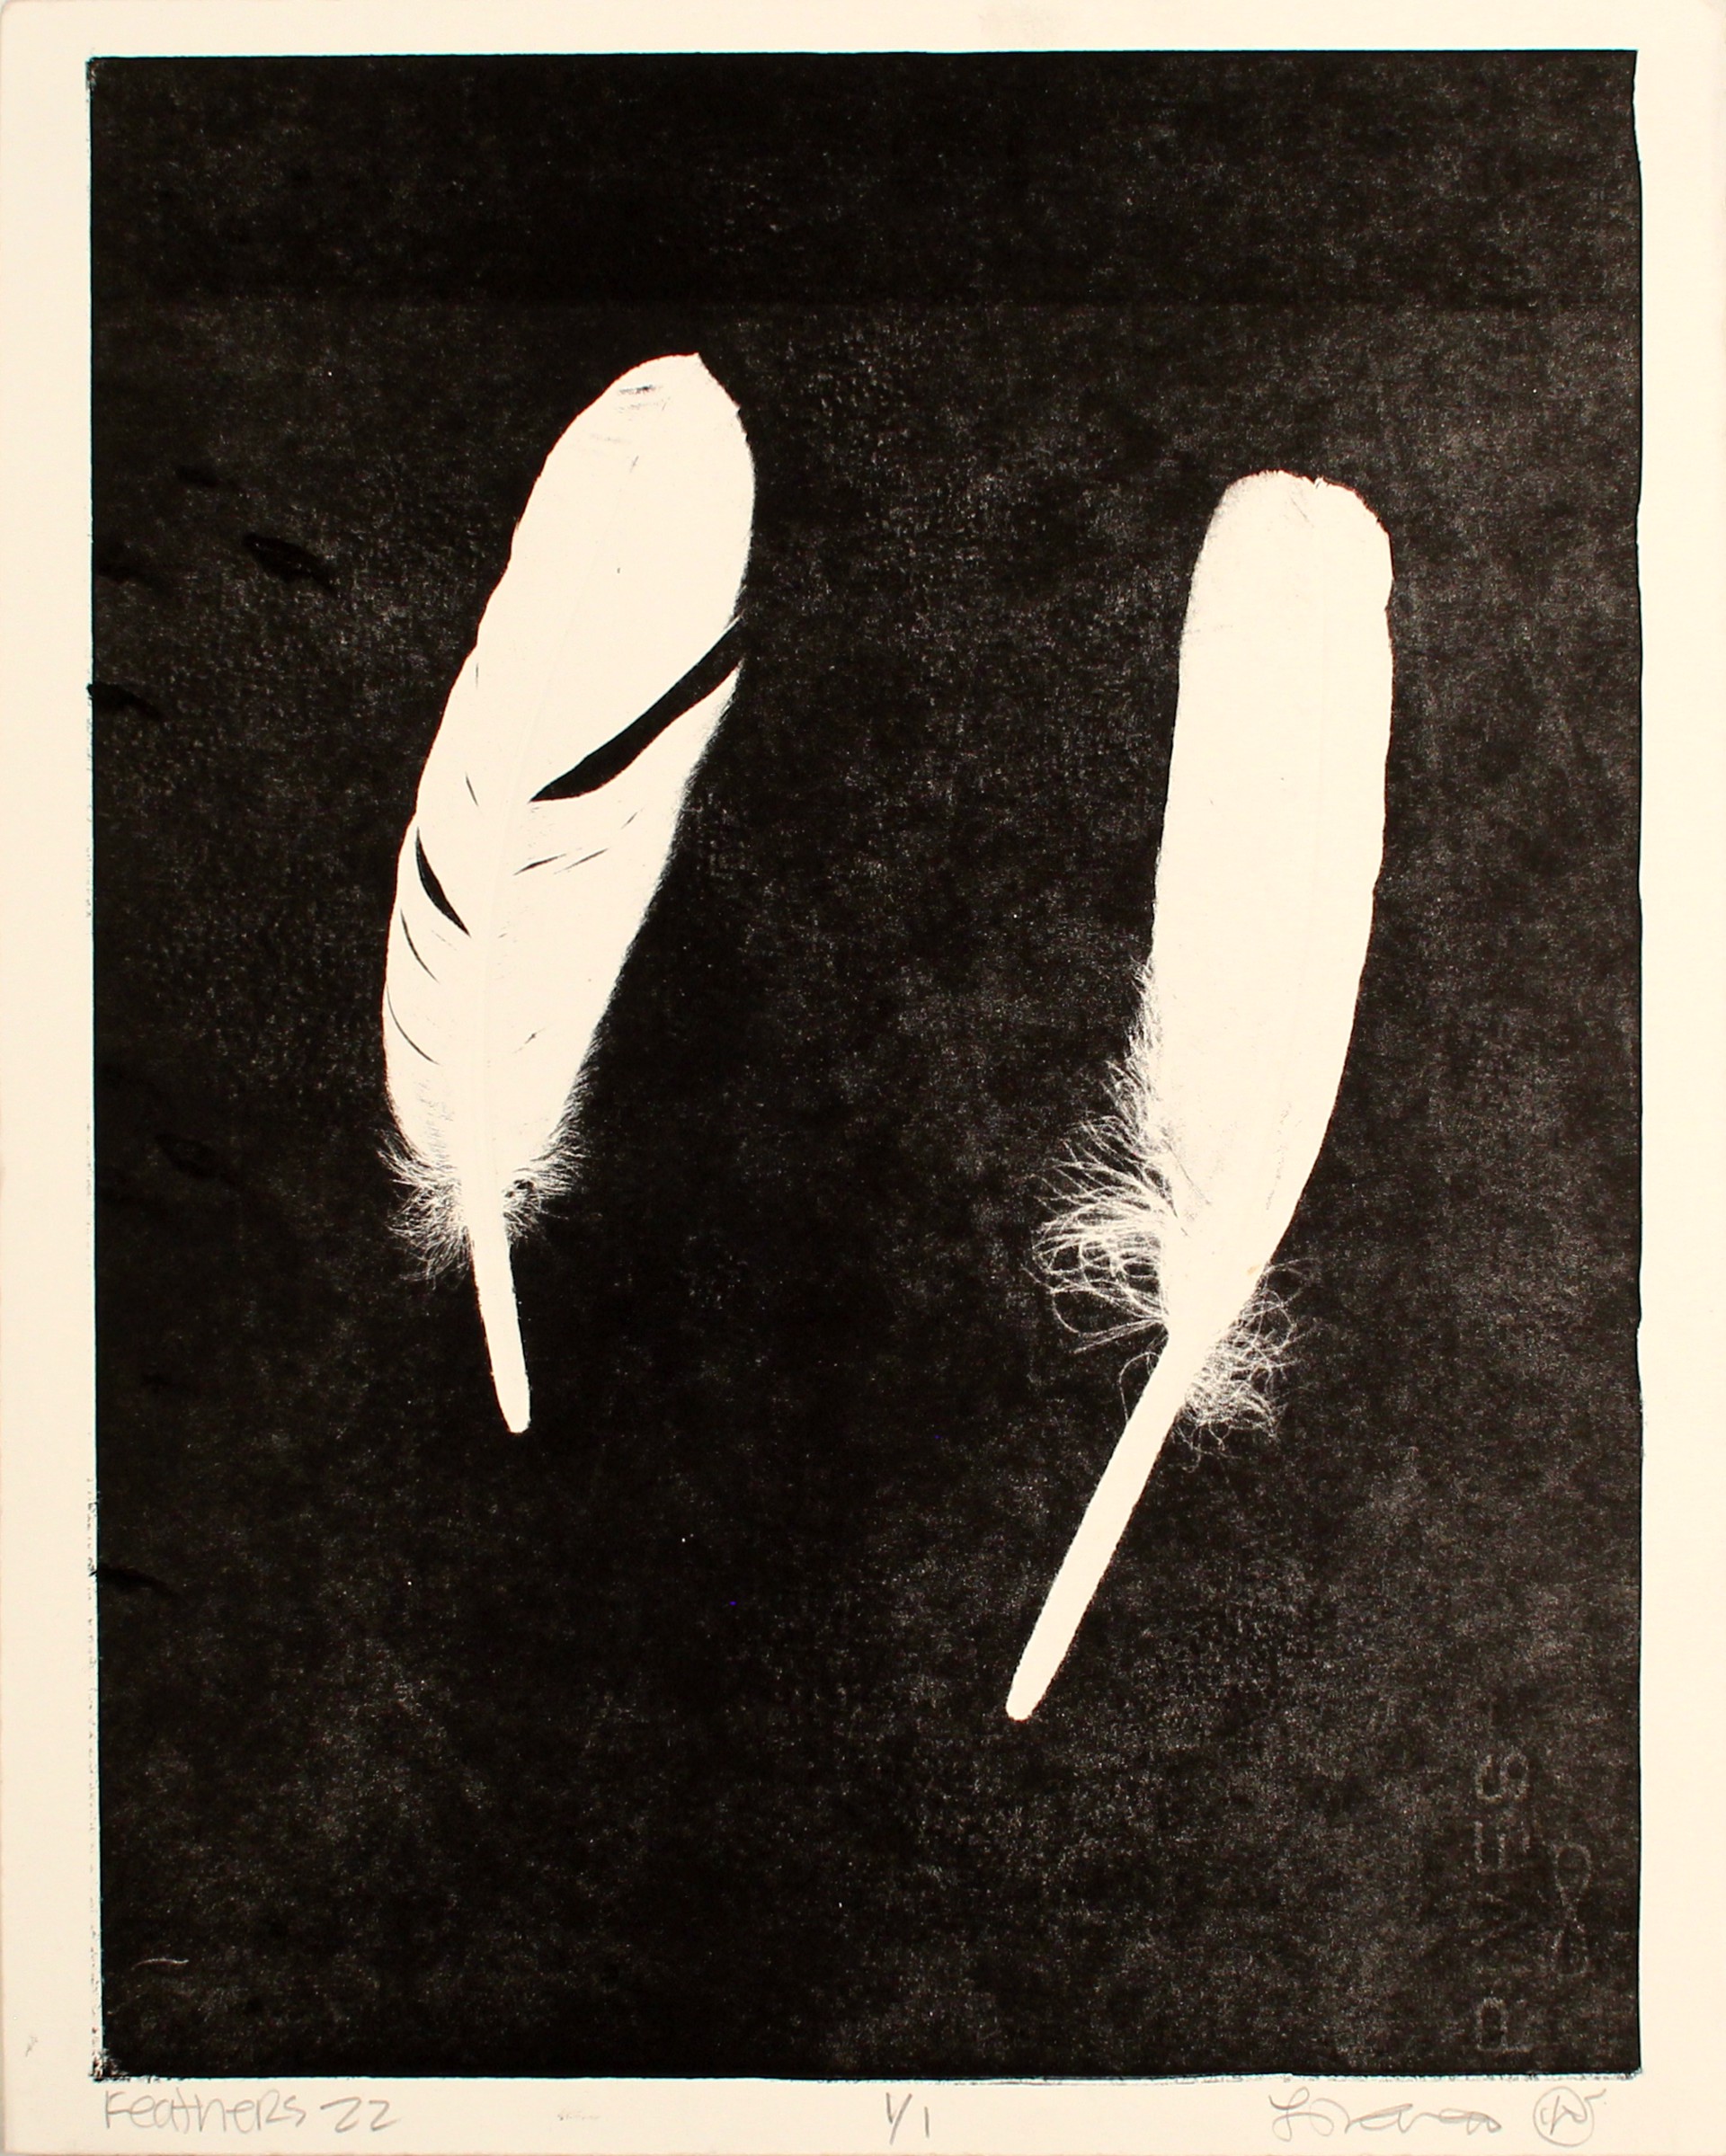 Feathers 22 II by Luis Garcia